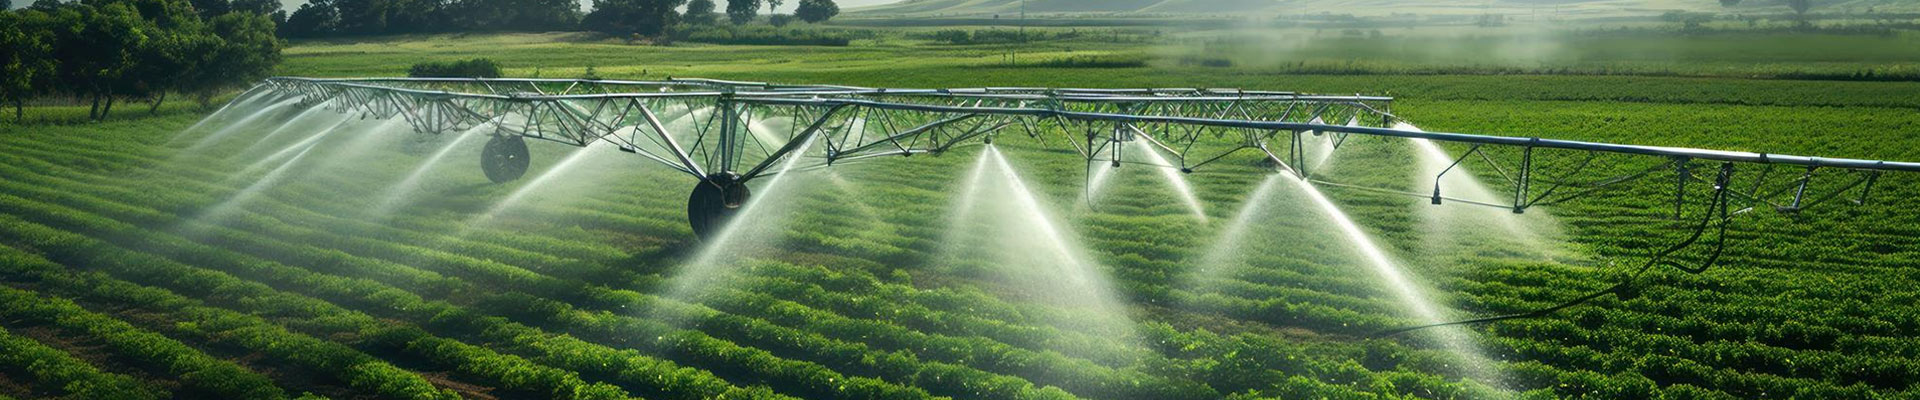 sprinklers irrigation